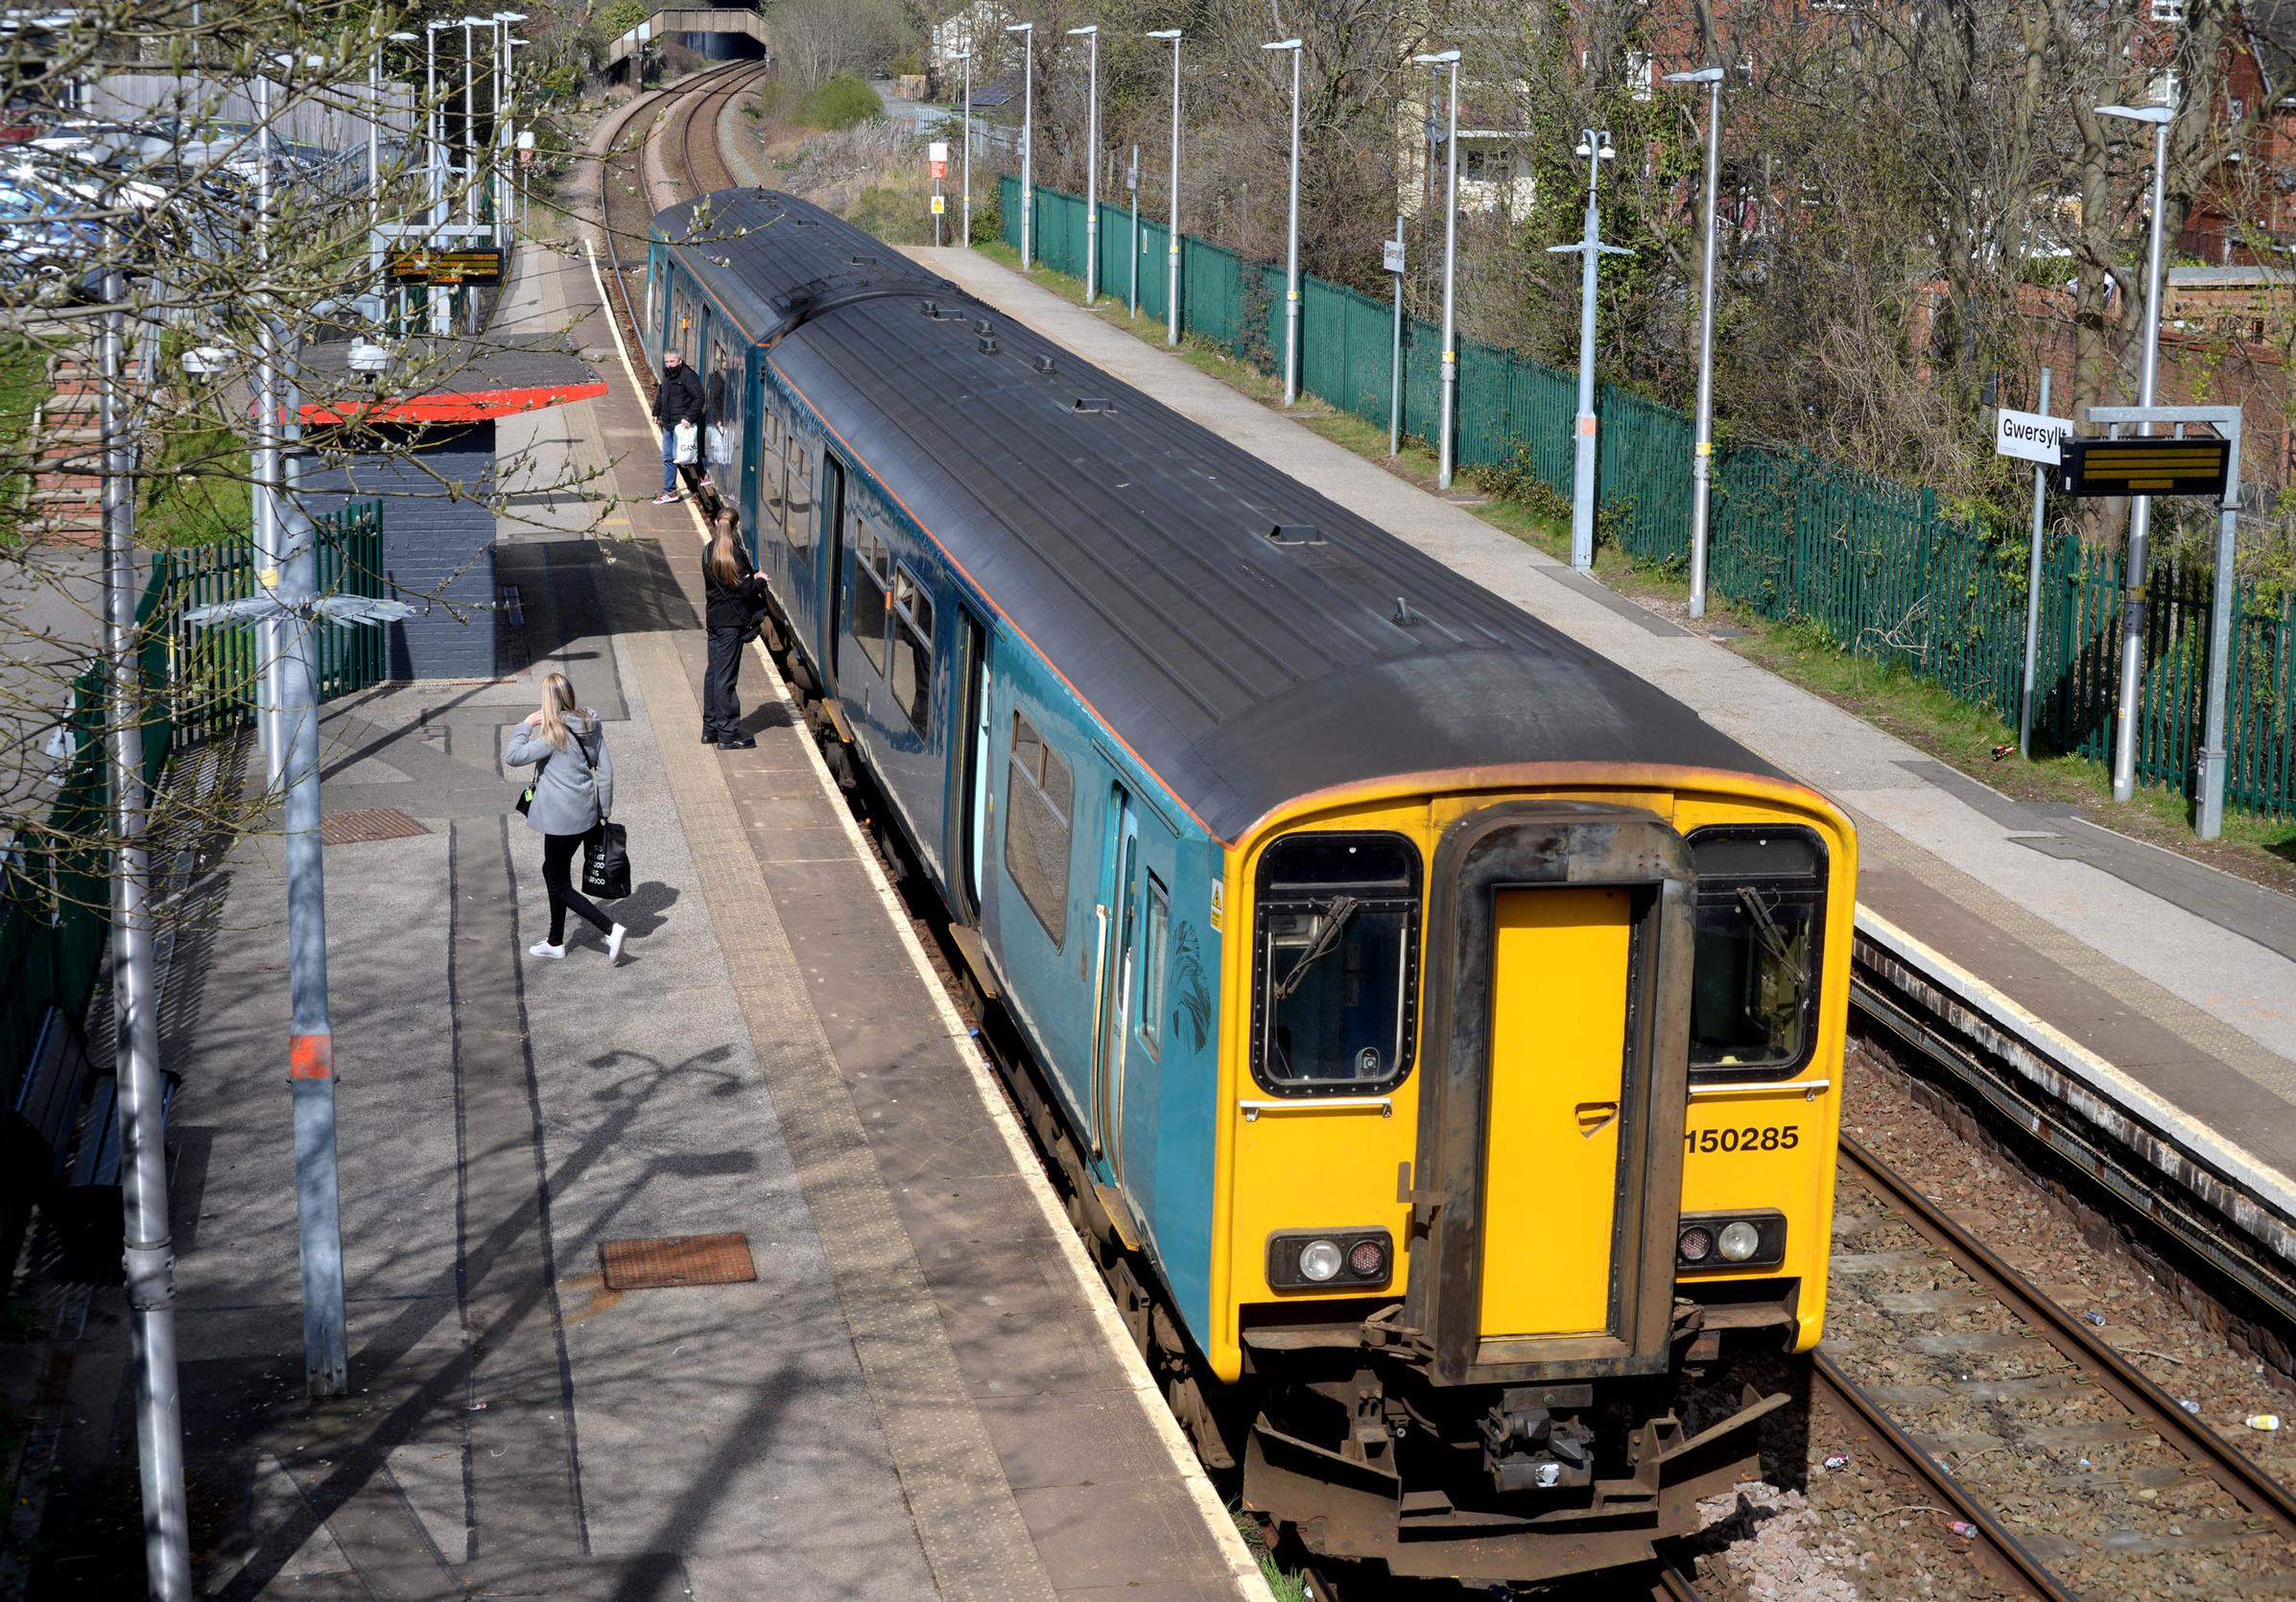 The Wrexham-Bidston line at Gwersyll station